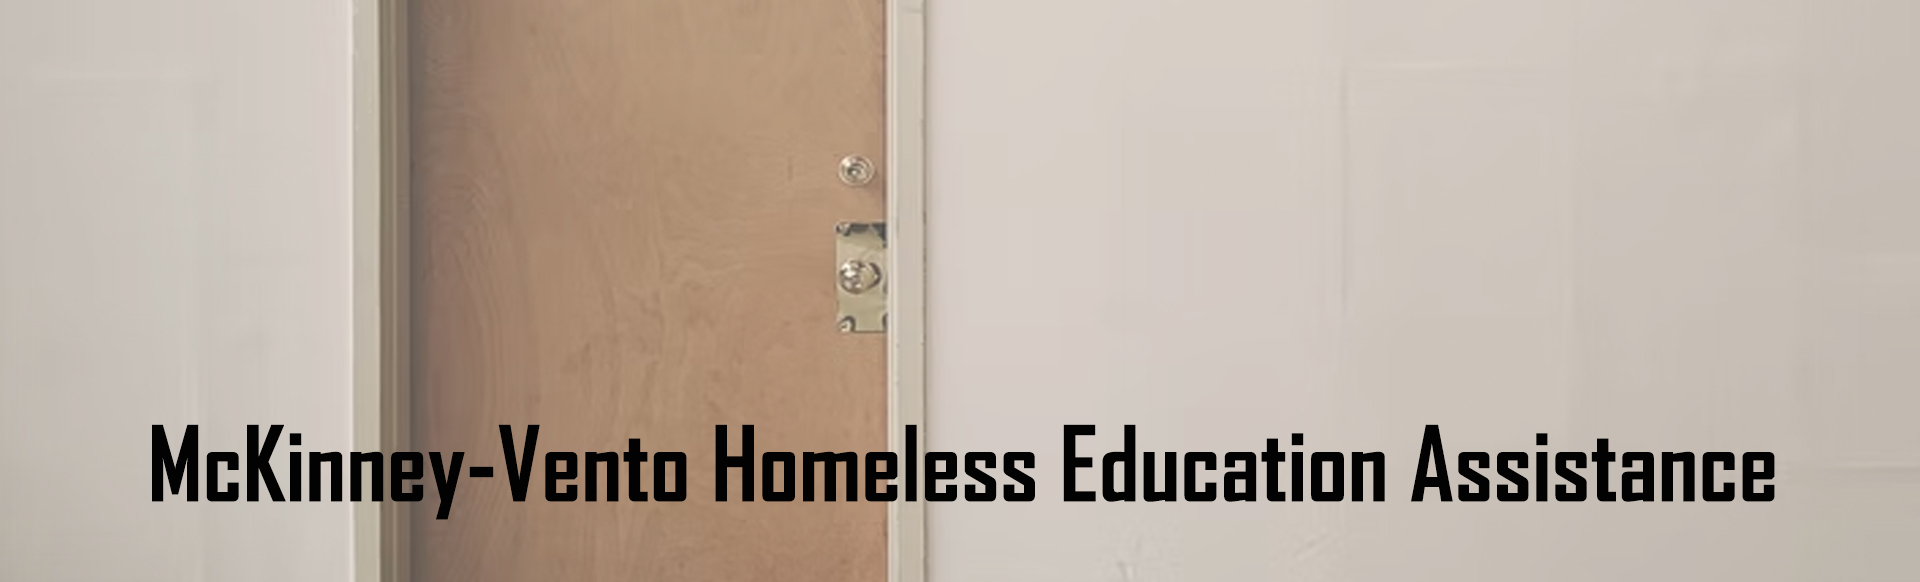 McKinney Vento Homeless Education Assistance